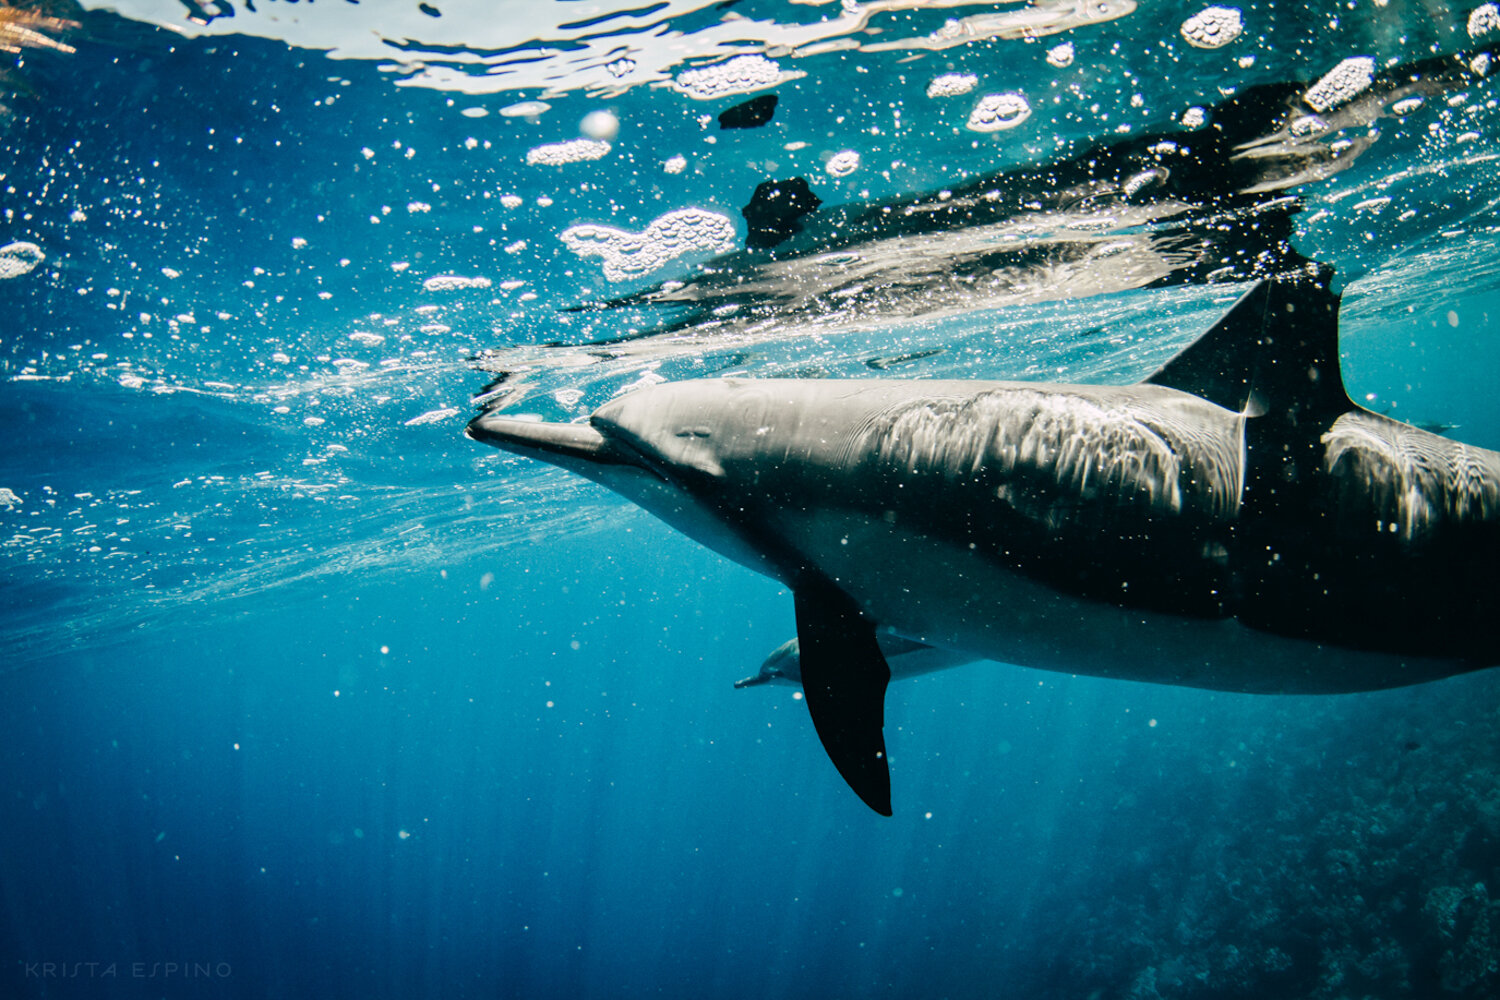 dolphin eco tour wild wildlife sealife lifestyle nature photography photographer krista espino travel underwater swim ocean big island hawaii kona dolphins_-20.jpg